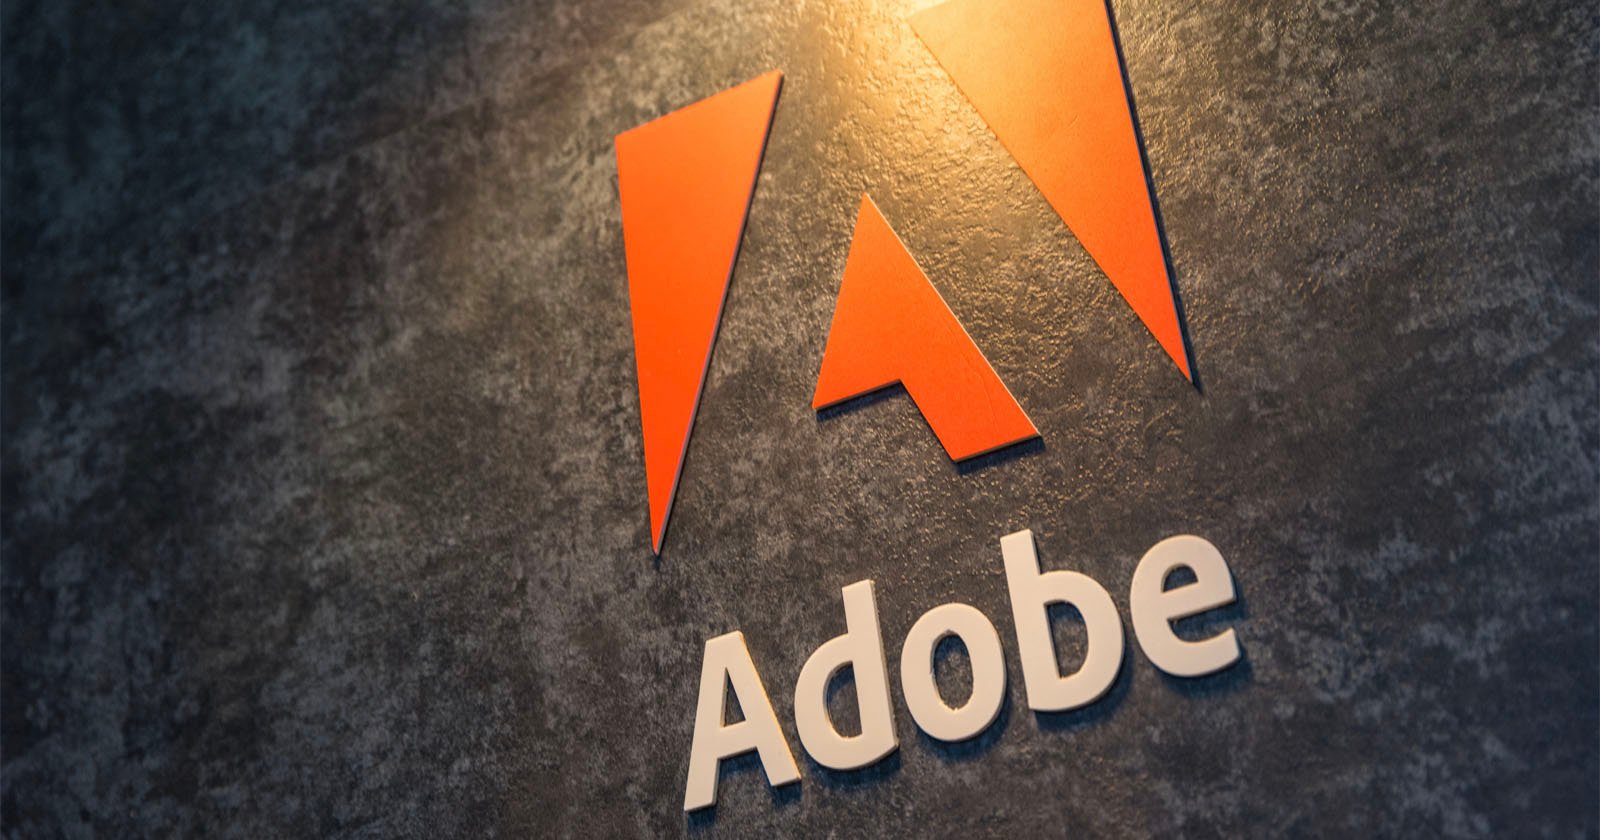 Adobe Says AI is the New Digital Camera